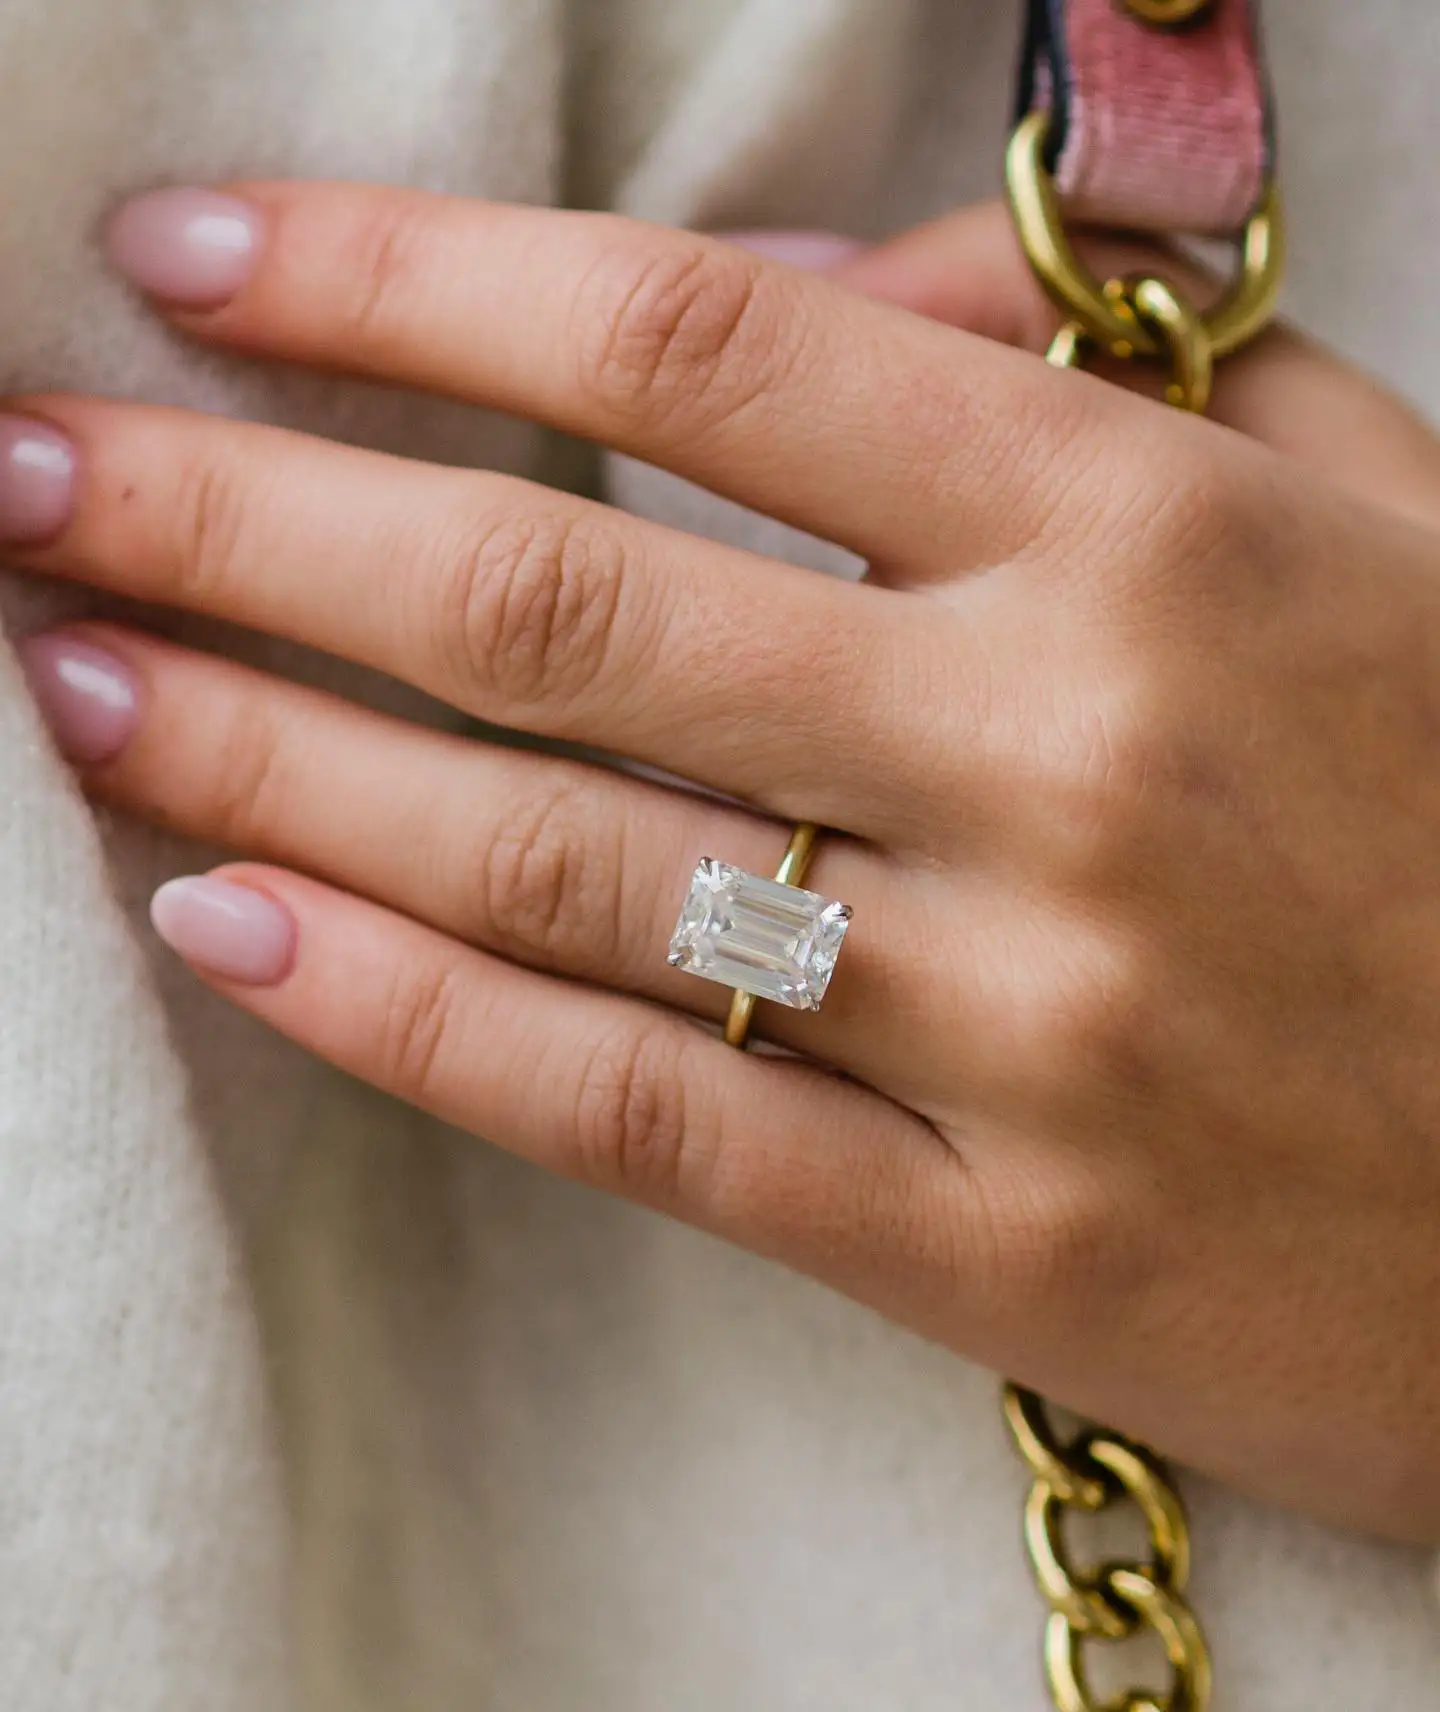 JOVOVASMILE Moissanite Diamond Wedding Ring 5.5 Carat 12x8.5mm Elongated Emerald Cut Two-Tone 18k Yellow White Gold Solitaire